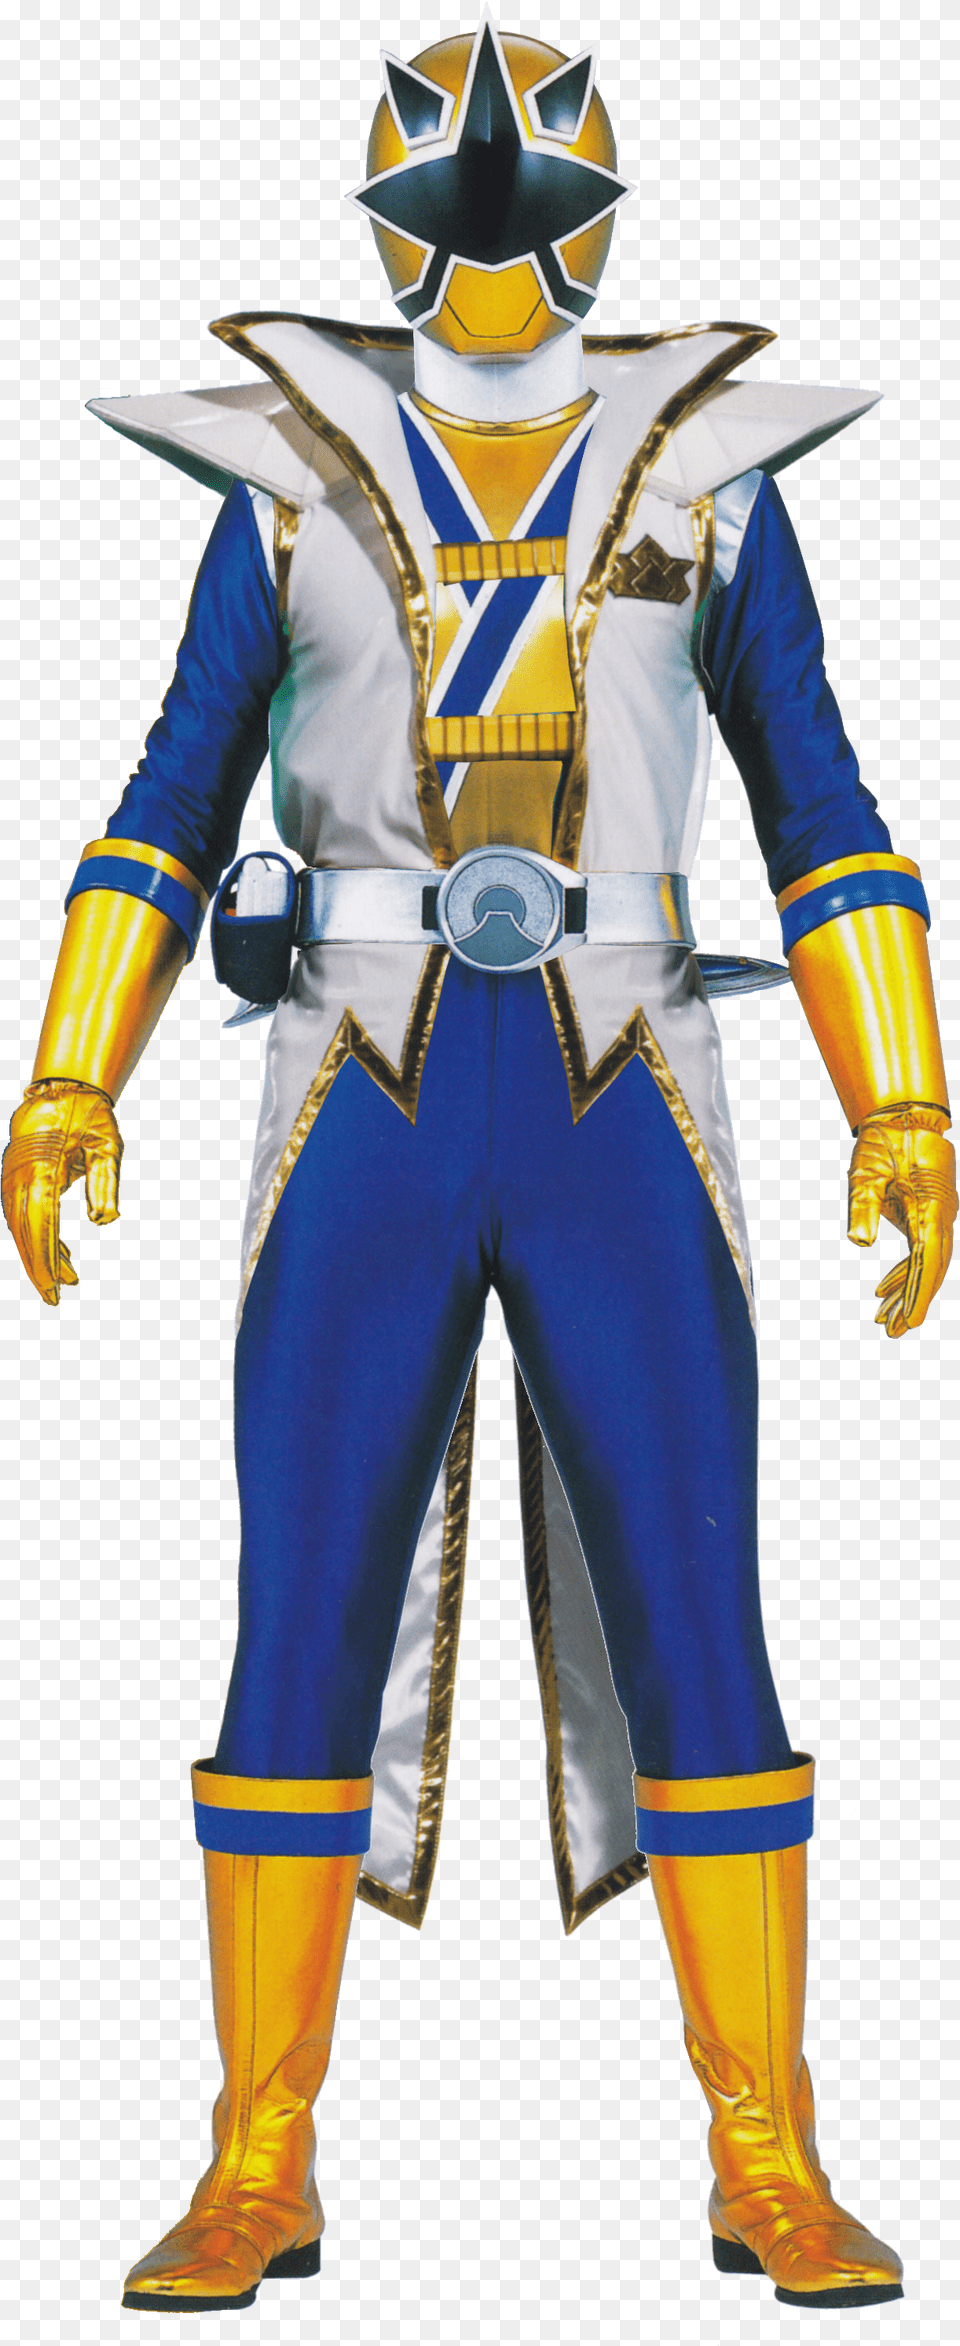 Super Shinken Gold Samurai Power Rangers Samurai Gold Ranger Costume, Clothing, Person, Adult, Male Png Image